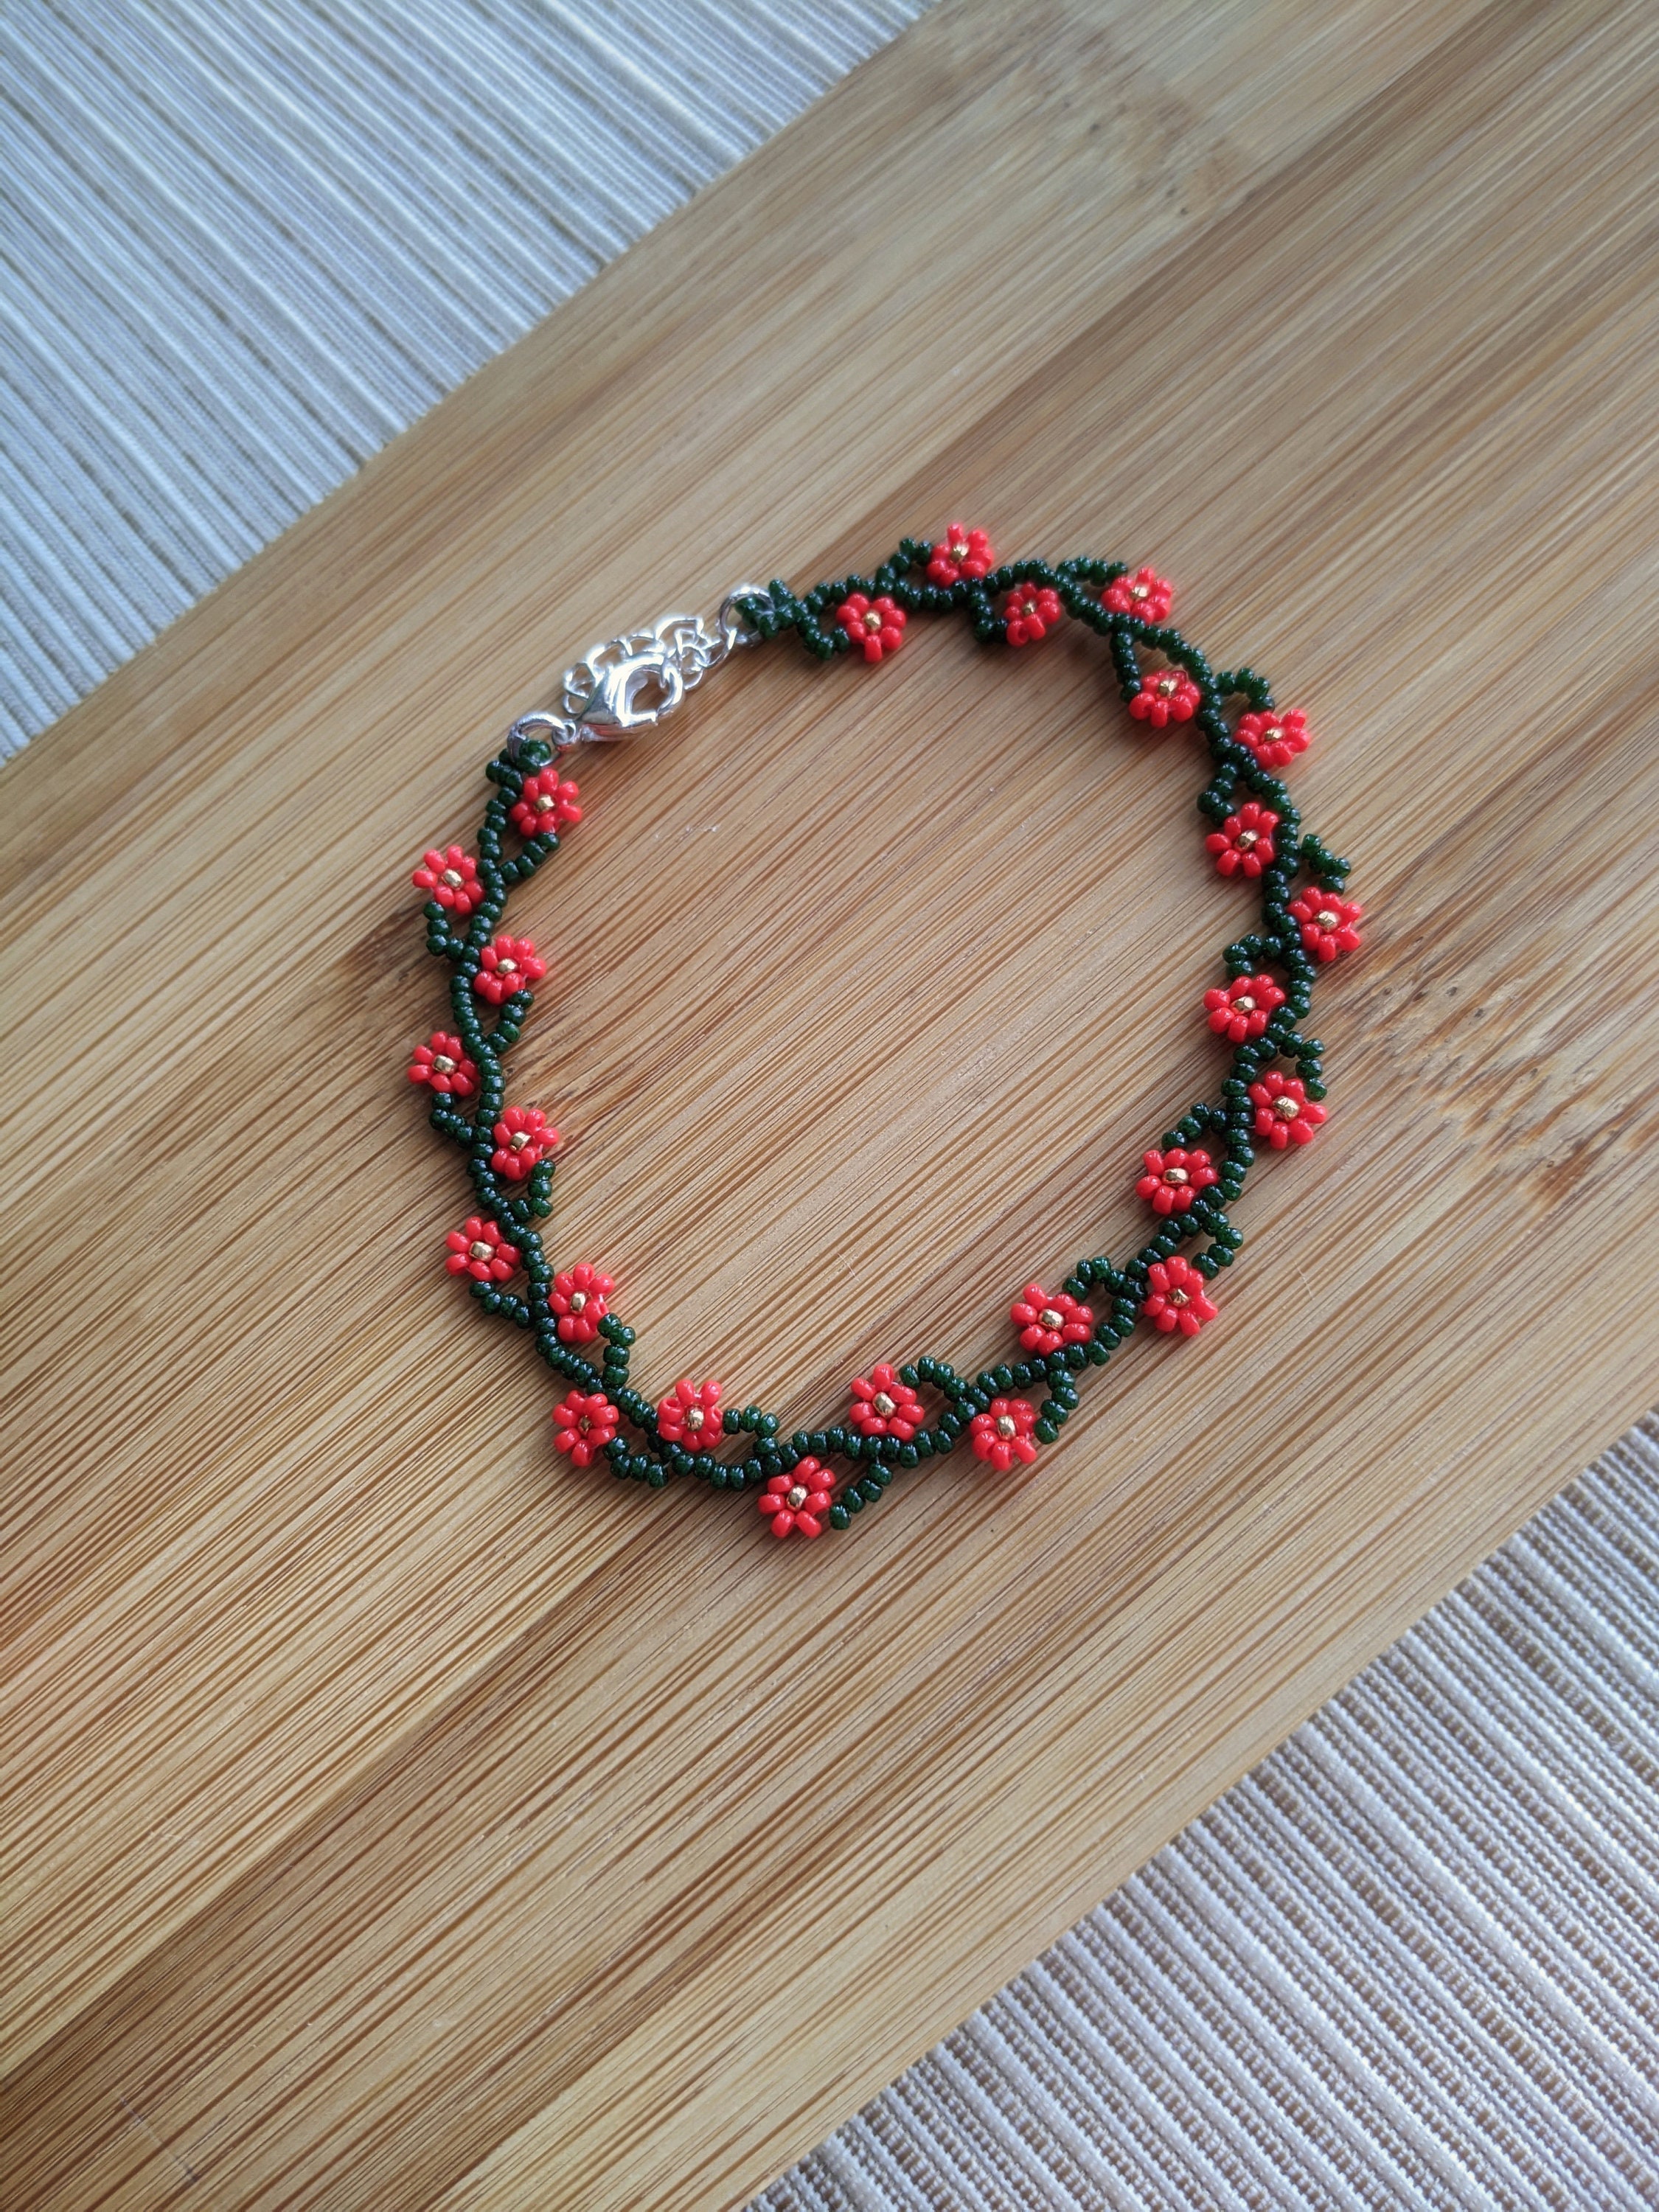 Red Flower Bracelets Set Seed Bead Bracelets Cute Jewelry Aesthetic Bracelets Braided Handmade Jewellery Gift for Her 14 cm (5.5 inch) | Rain Flower